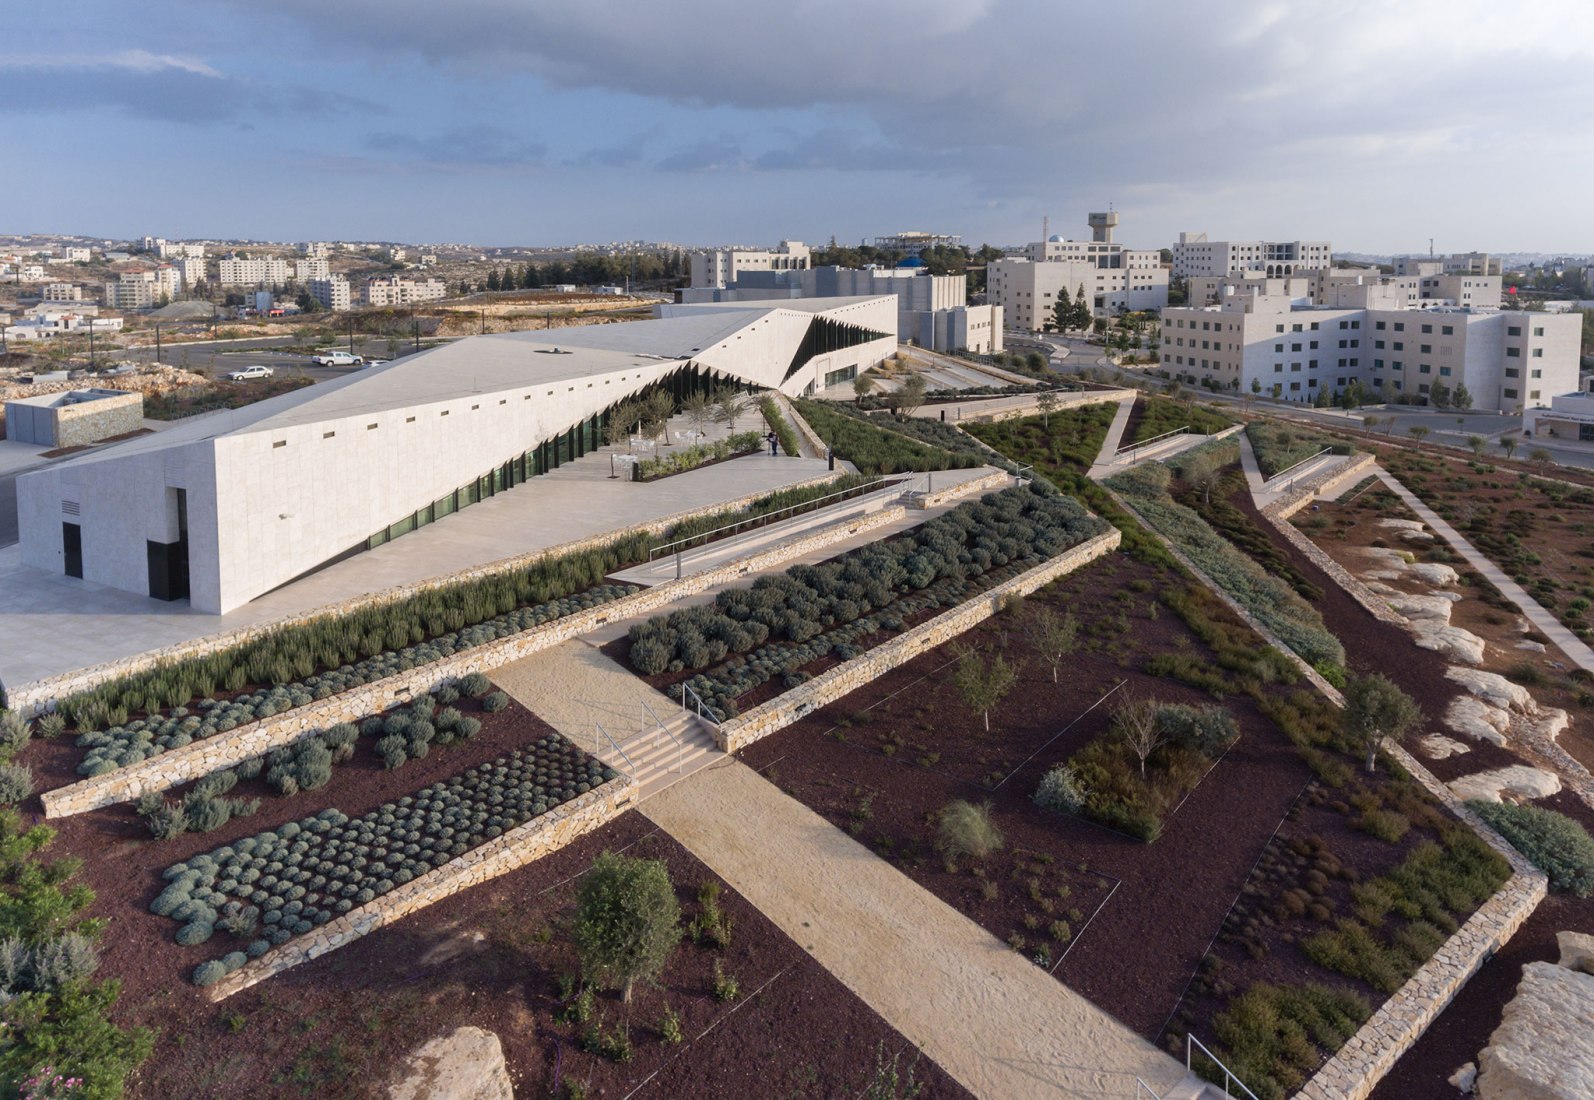 Vista general. El Museo Palestino por Heneghan Peng Arquitects. Birzeit, Palestina. Fotografía © Iwan Baan. Imagen cortesía de Heneghan Peng Arquitects